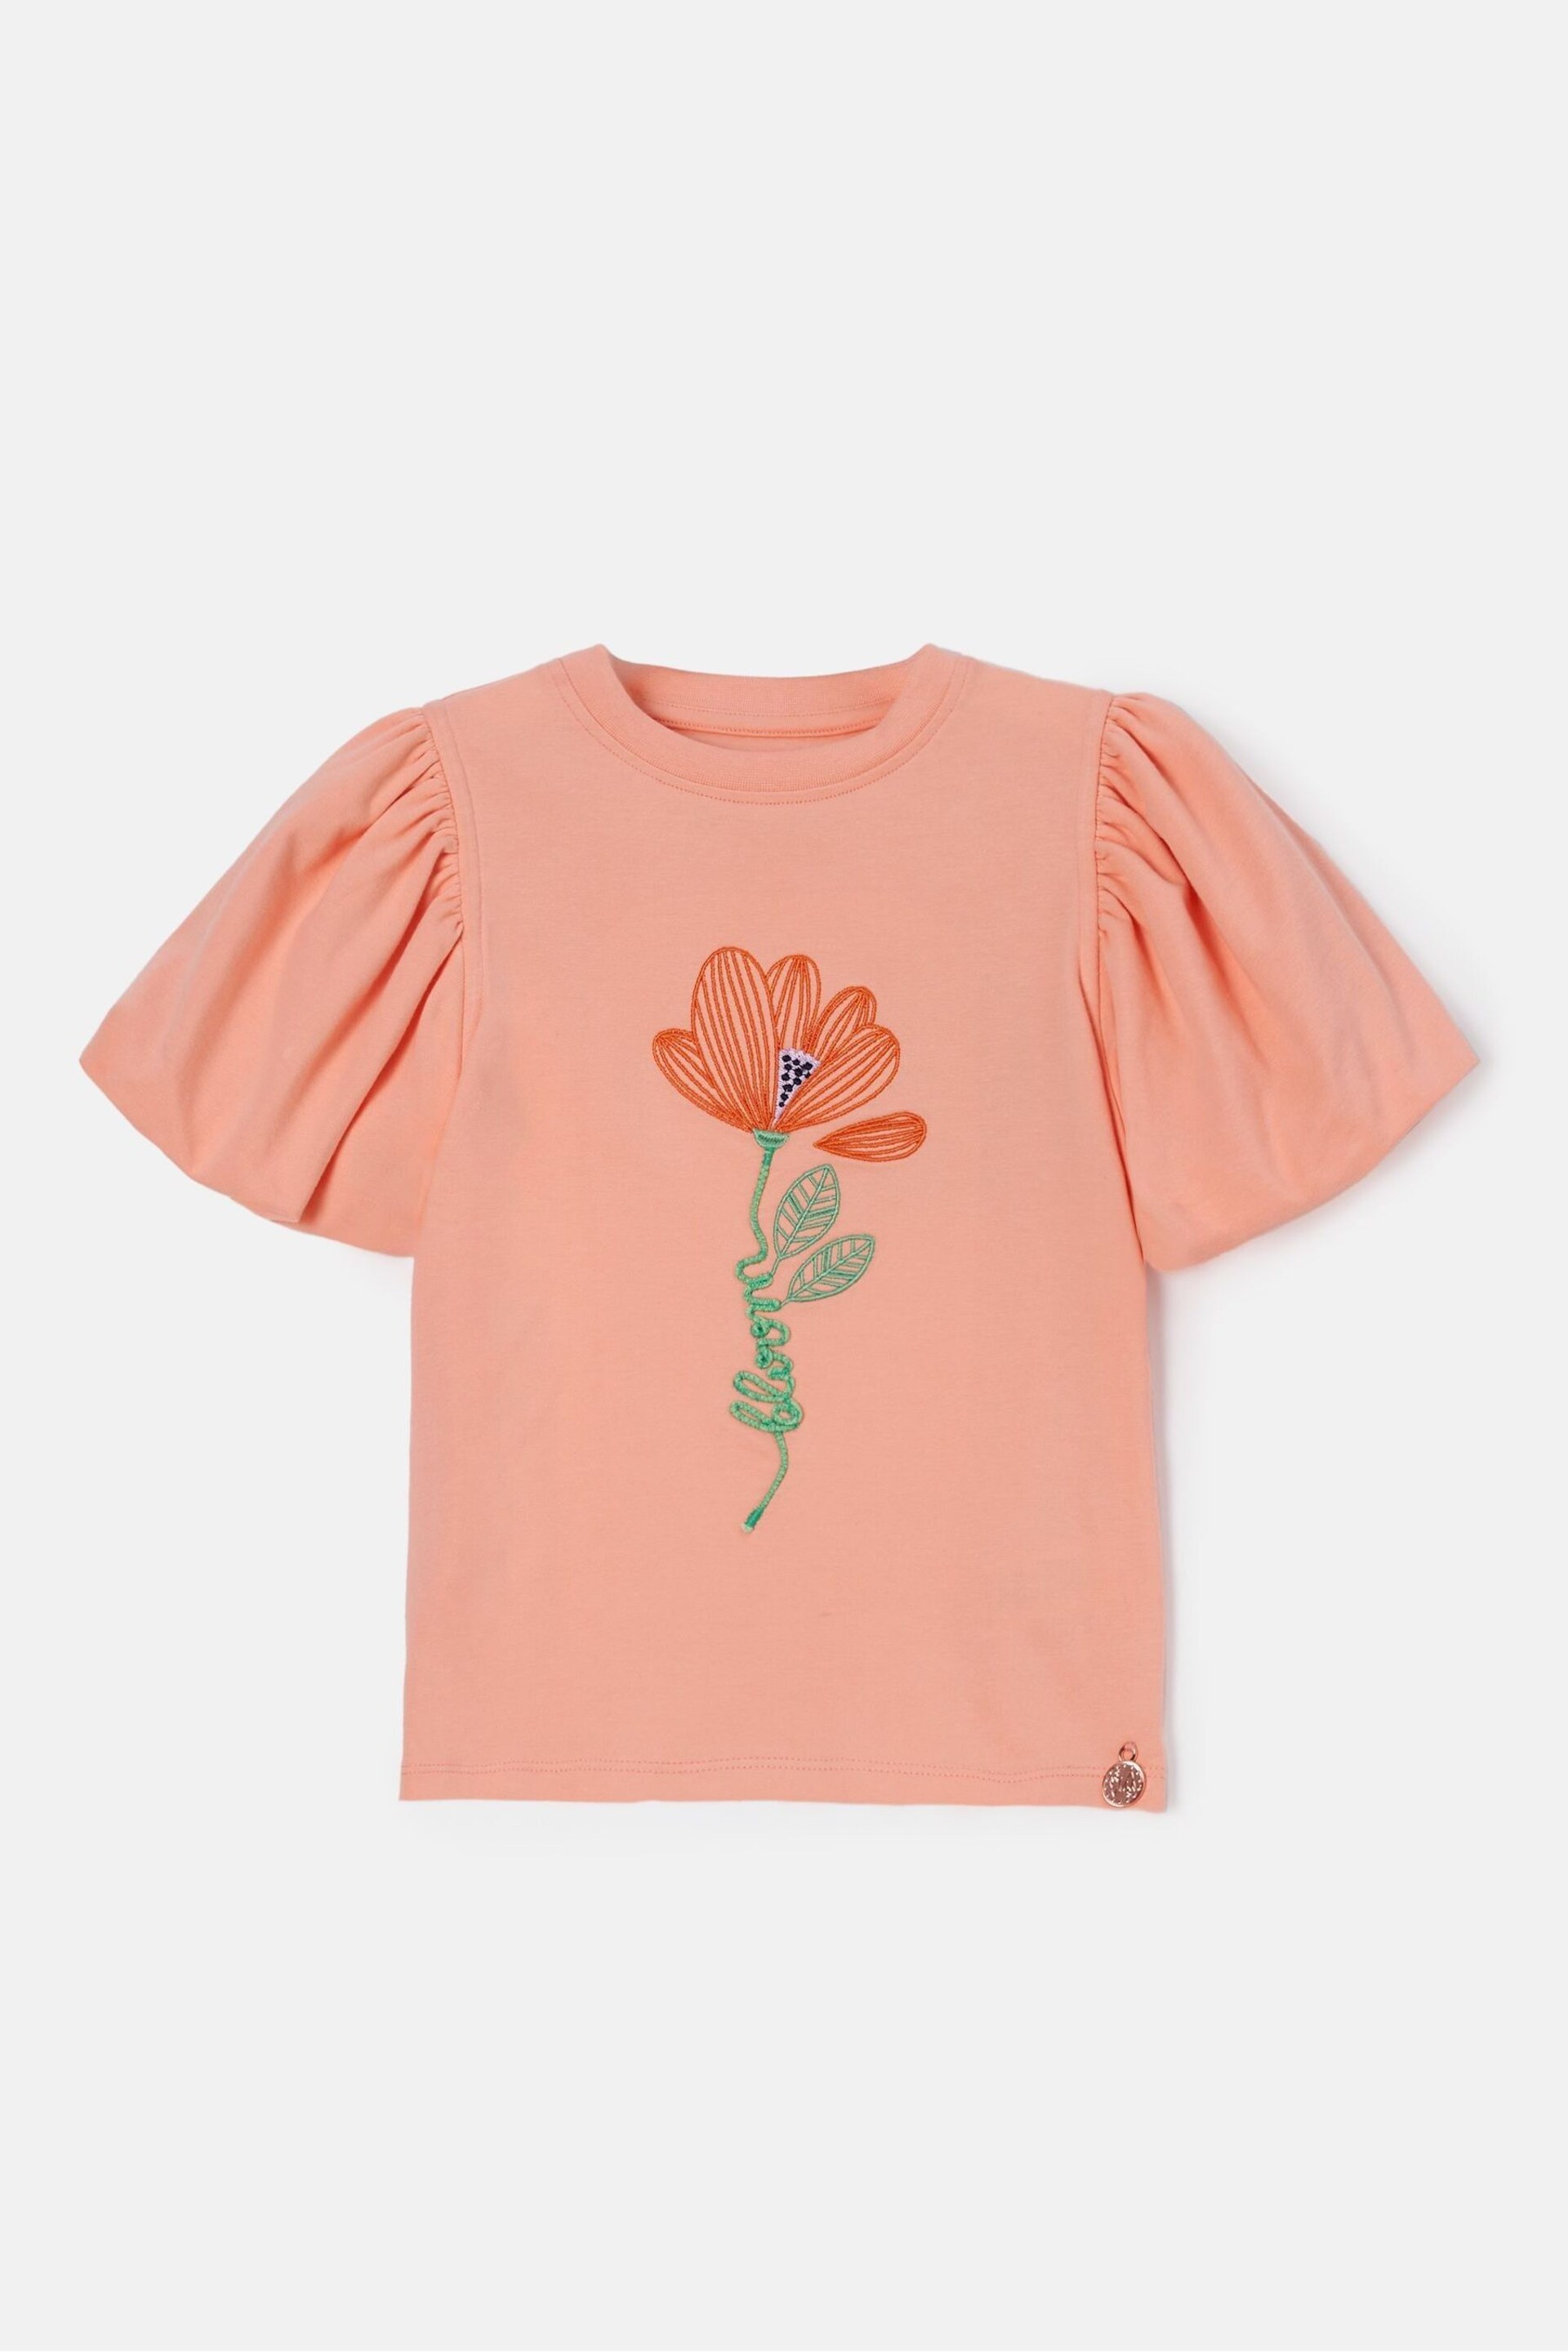 Angel & Rocket Apricot Orange Emmie Puff Sleeve T-Shirt - Image 3 of 5